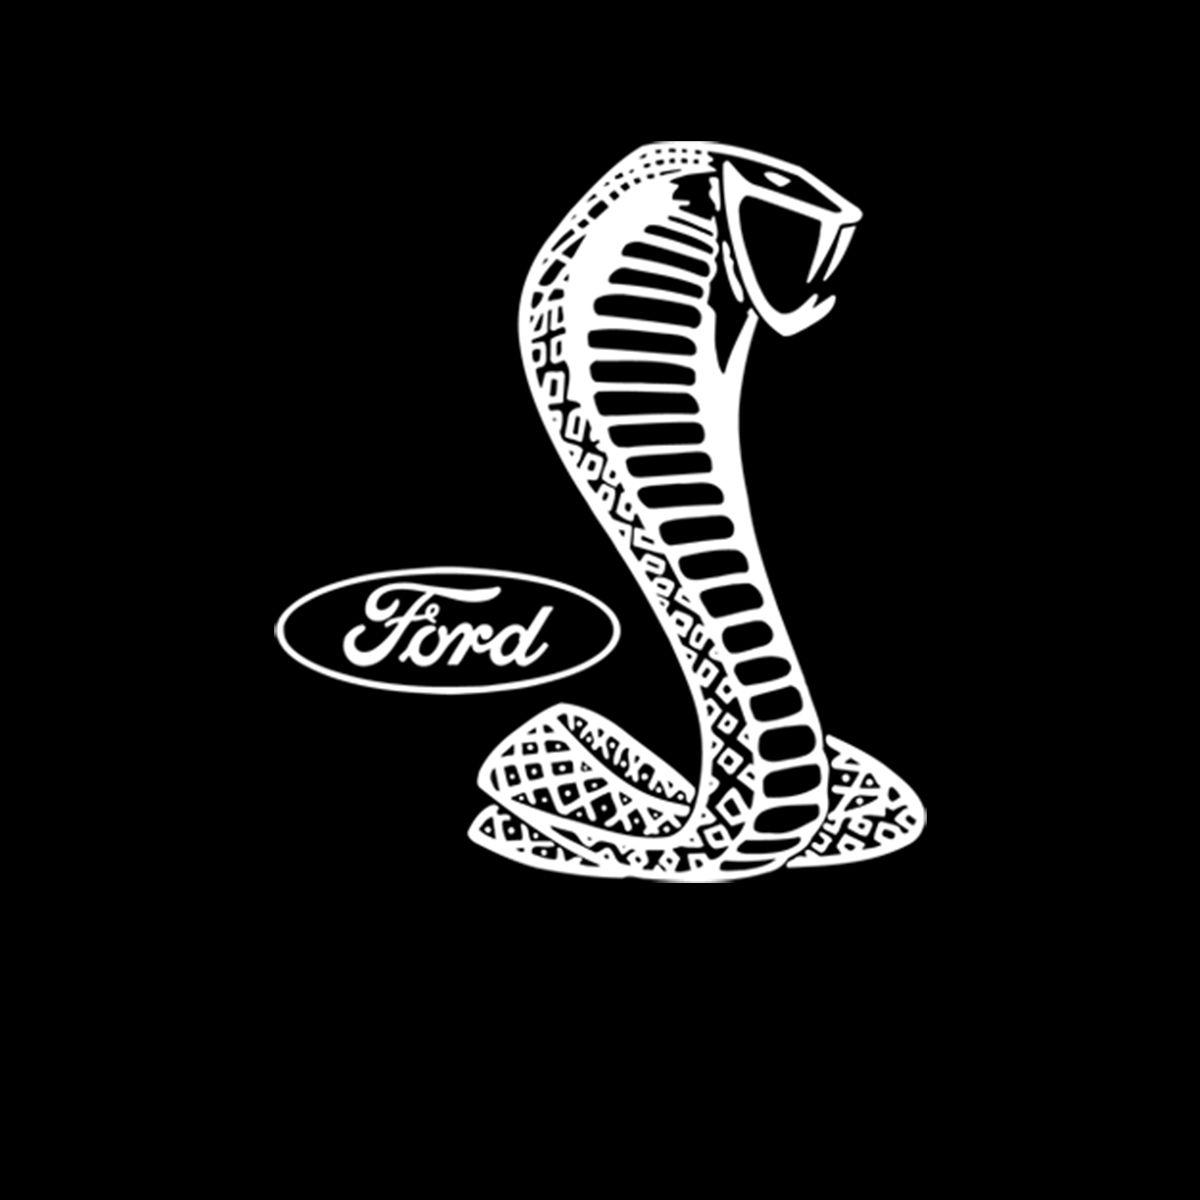 Ford Mustang Cobra Logo - Ford Mustang Cobra Logo Mens Sweatshirt S-3XL | eBay